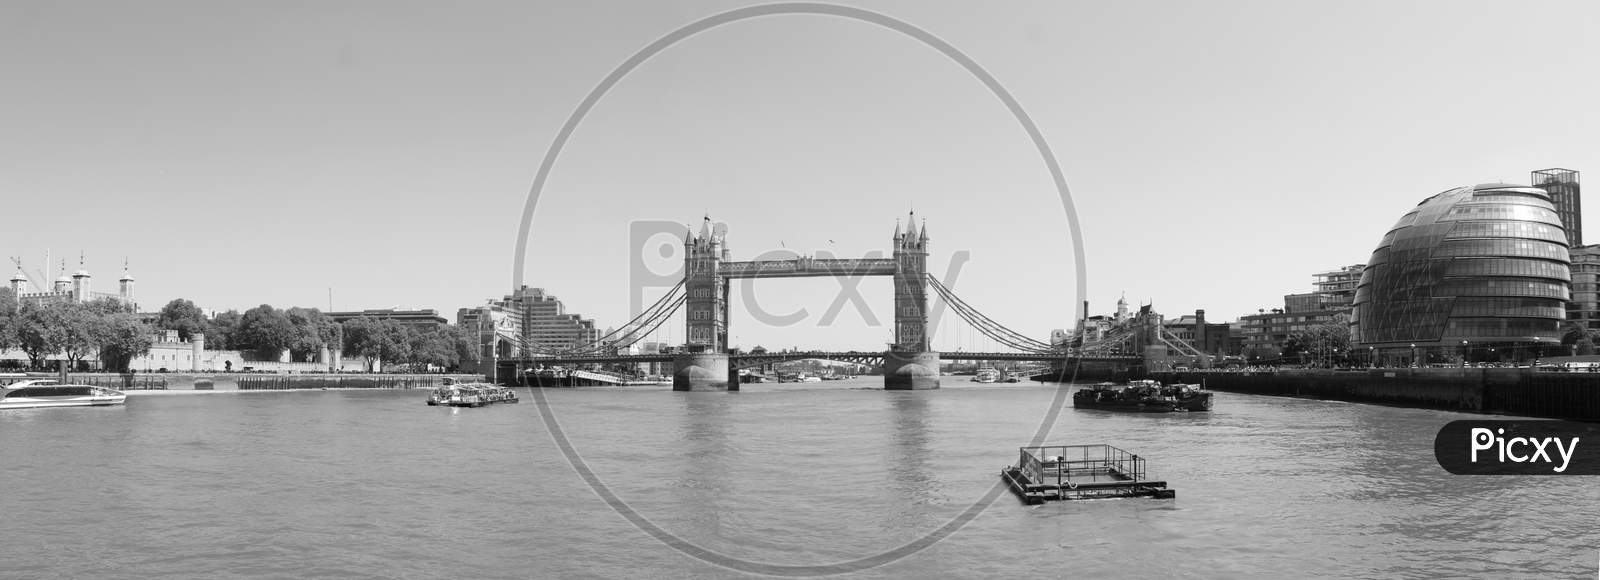 Tower Bridge - London